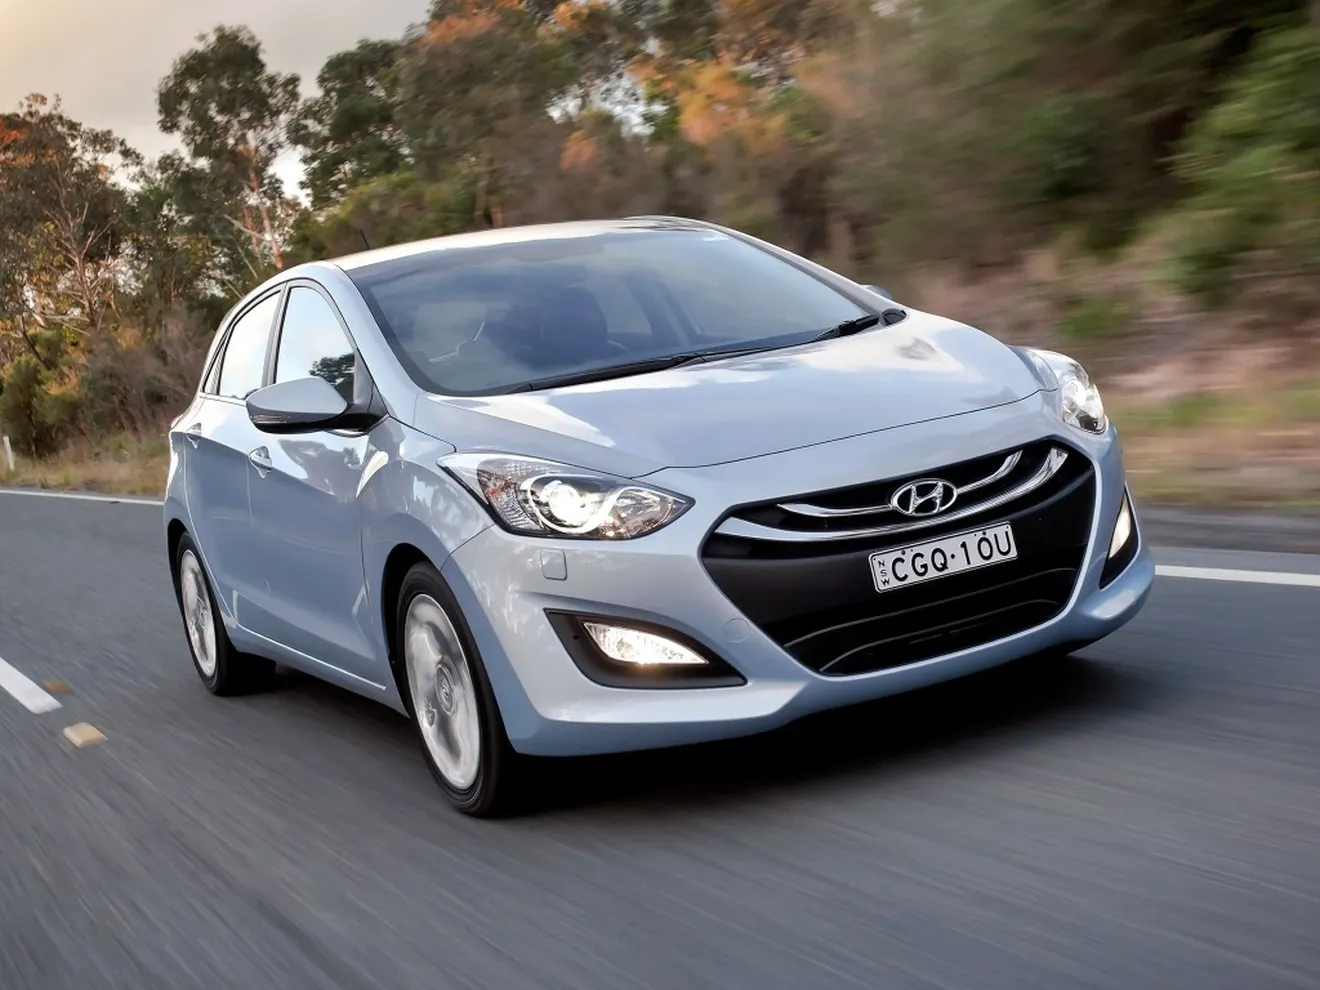 Australia - Mayo 2016: El Hyundai i30 logra el triplete